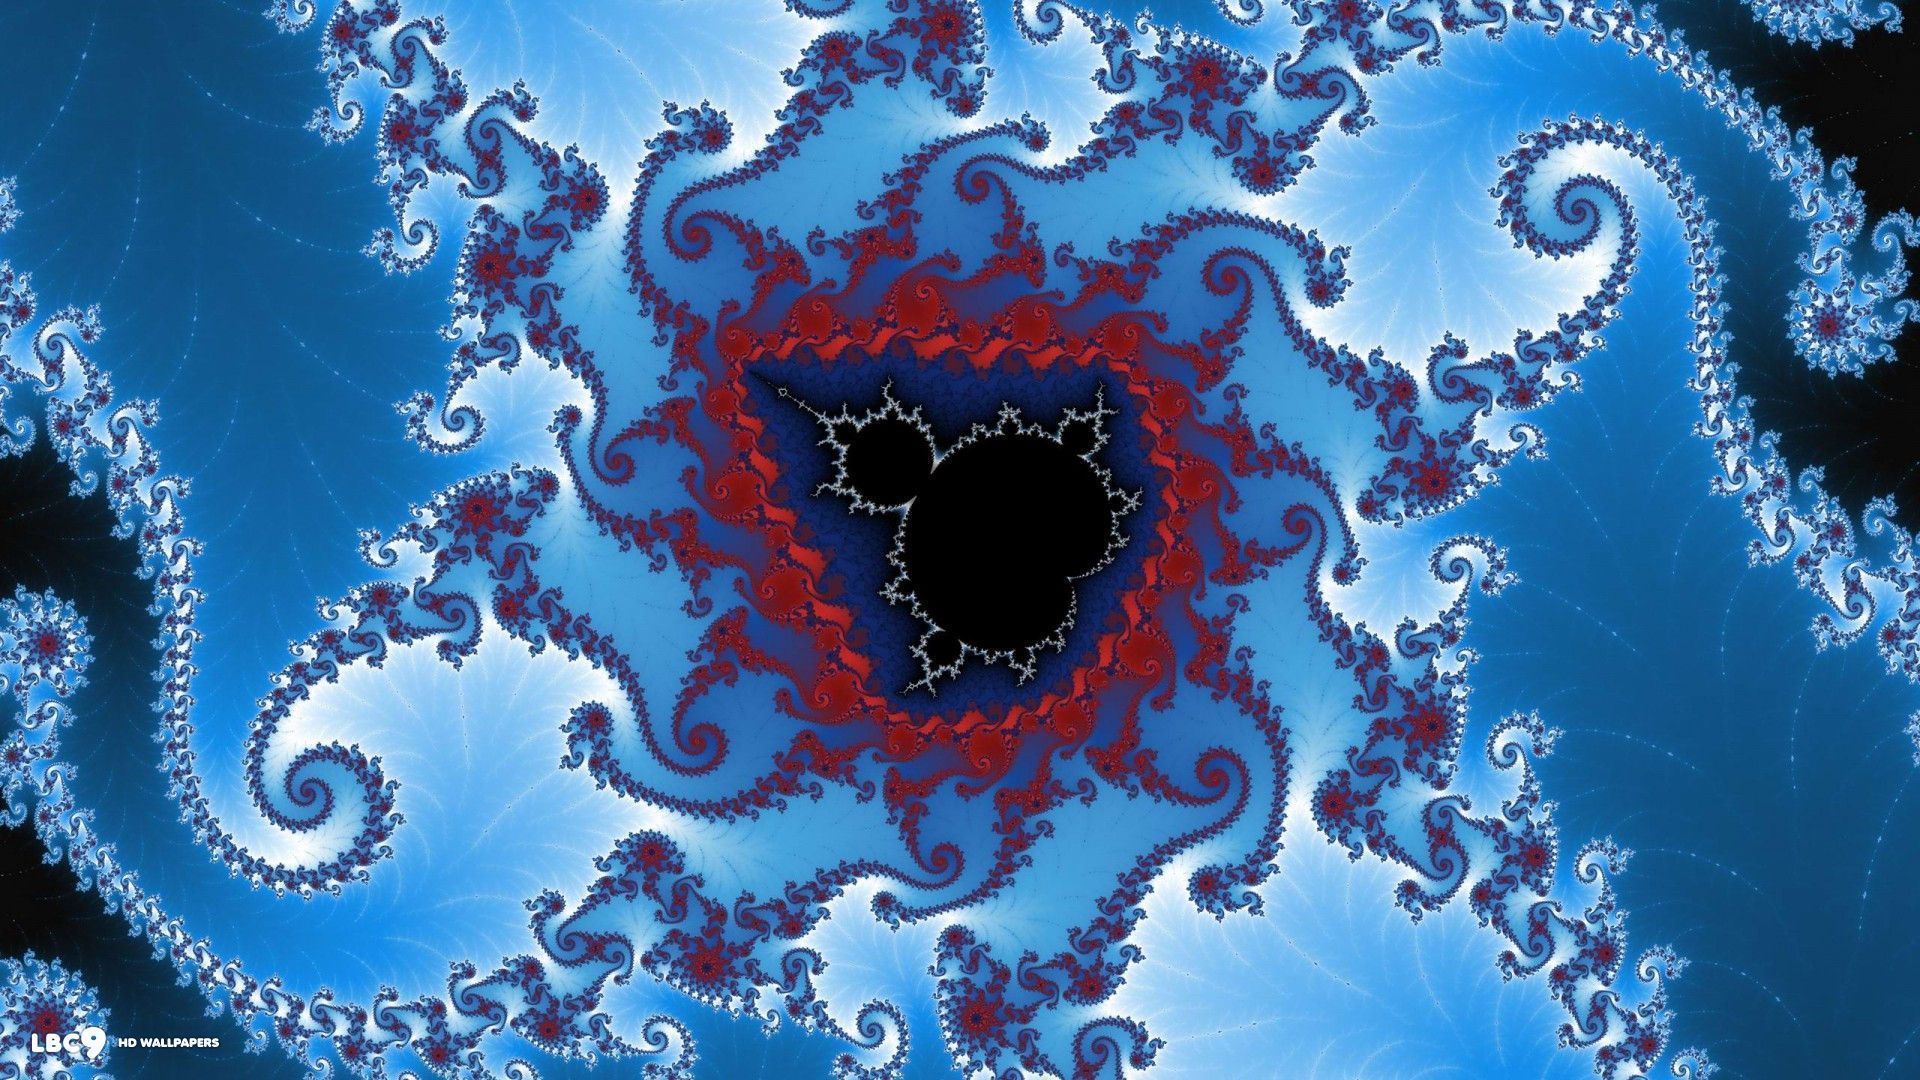 Mandelbrot set wallpaper 1 / 28 fractals hd backgrounds